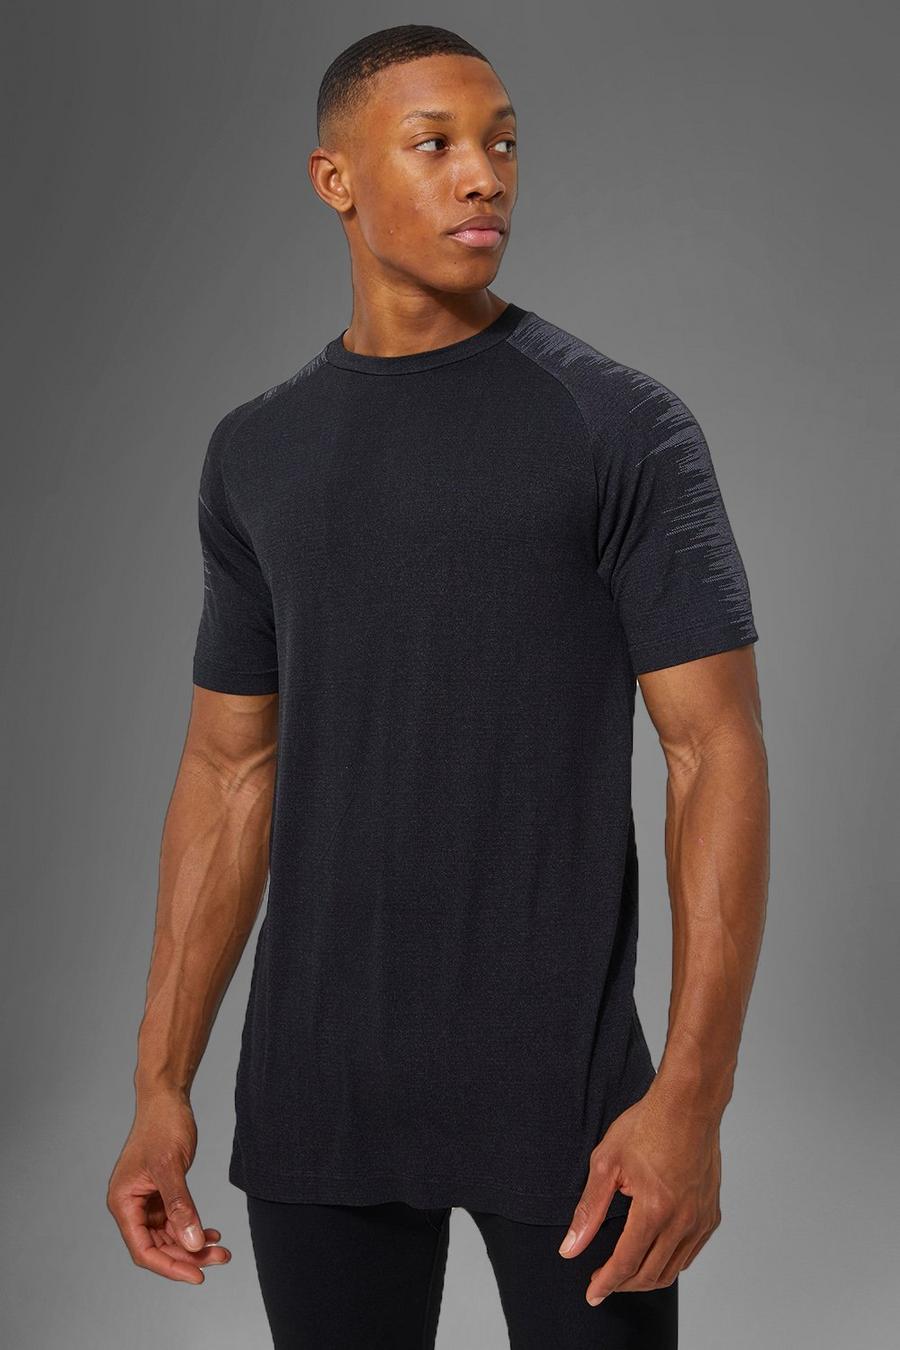 T-shirt Man Active senza cuciture con strisce laterali, Black negro